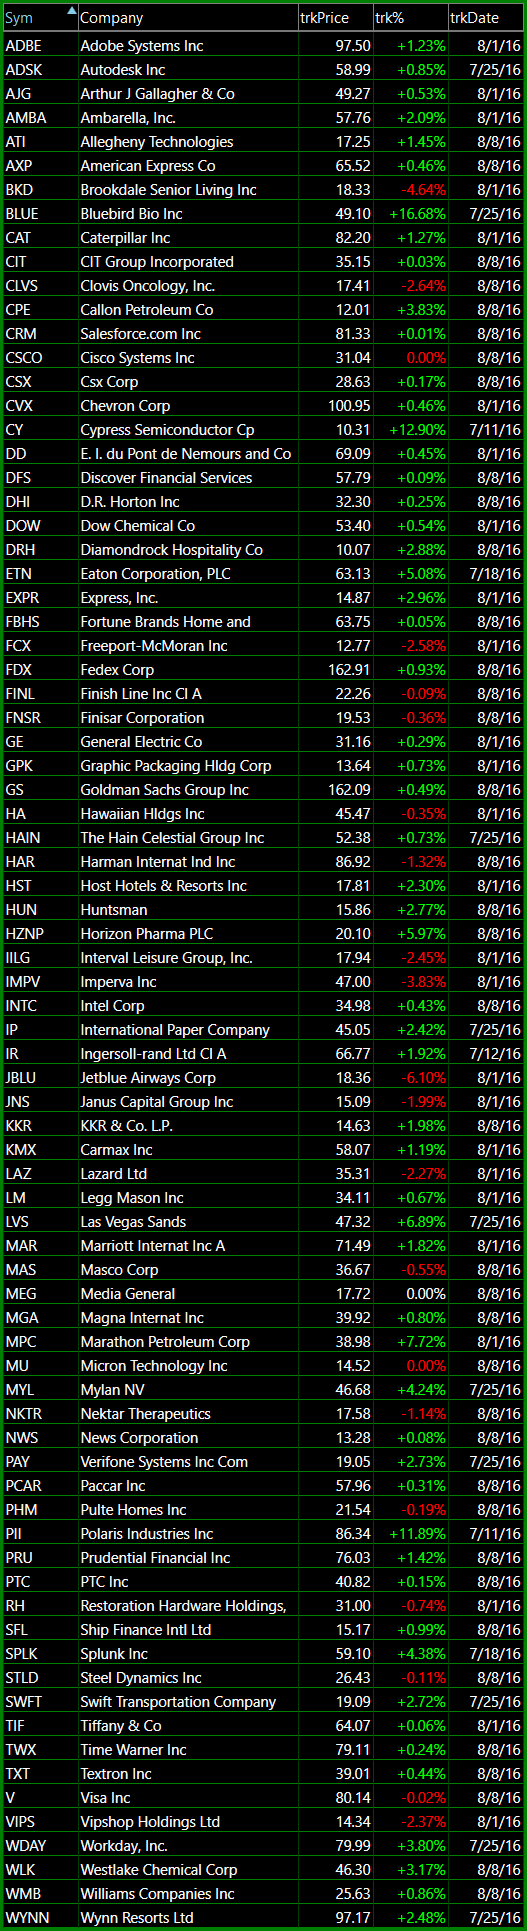 Bullish Stocks Watch List